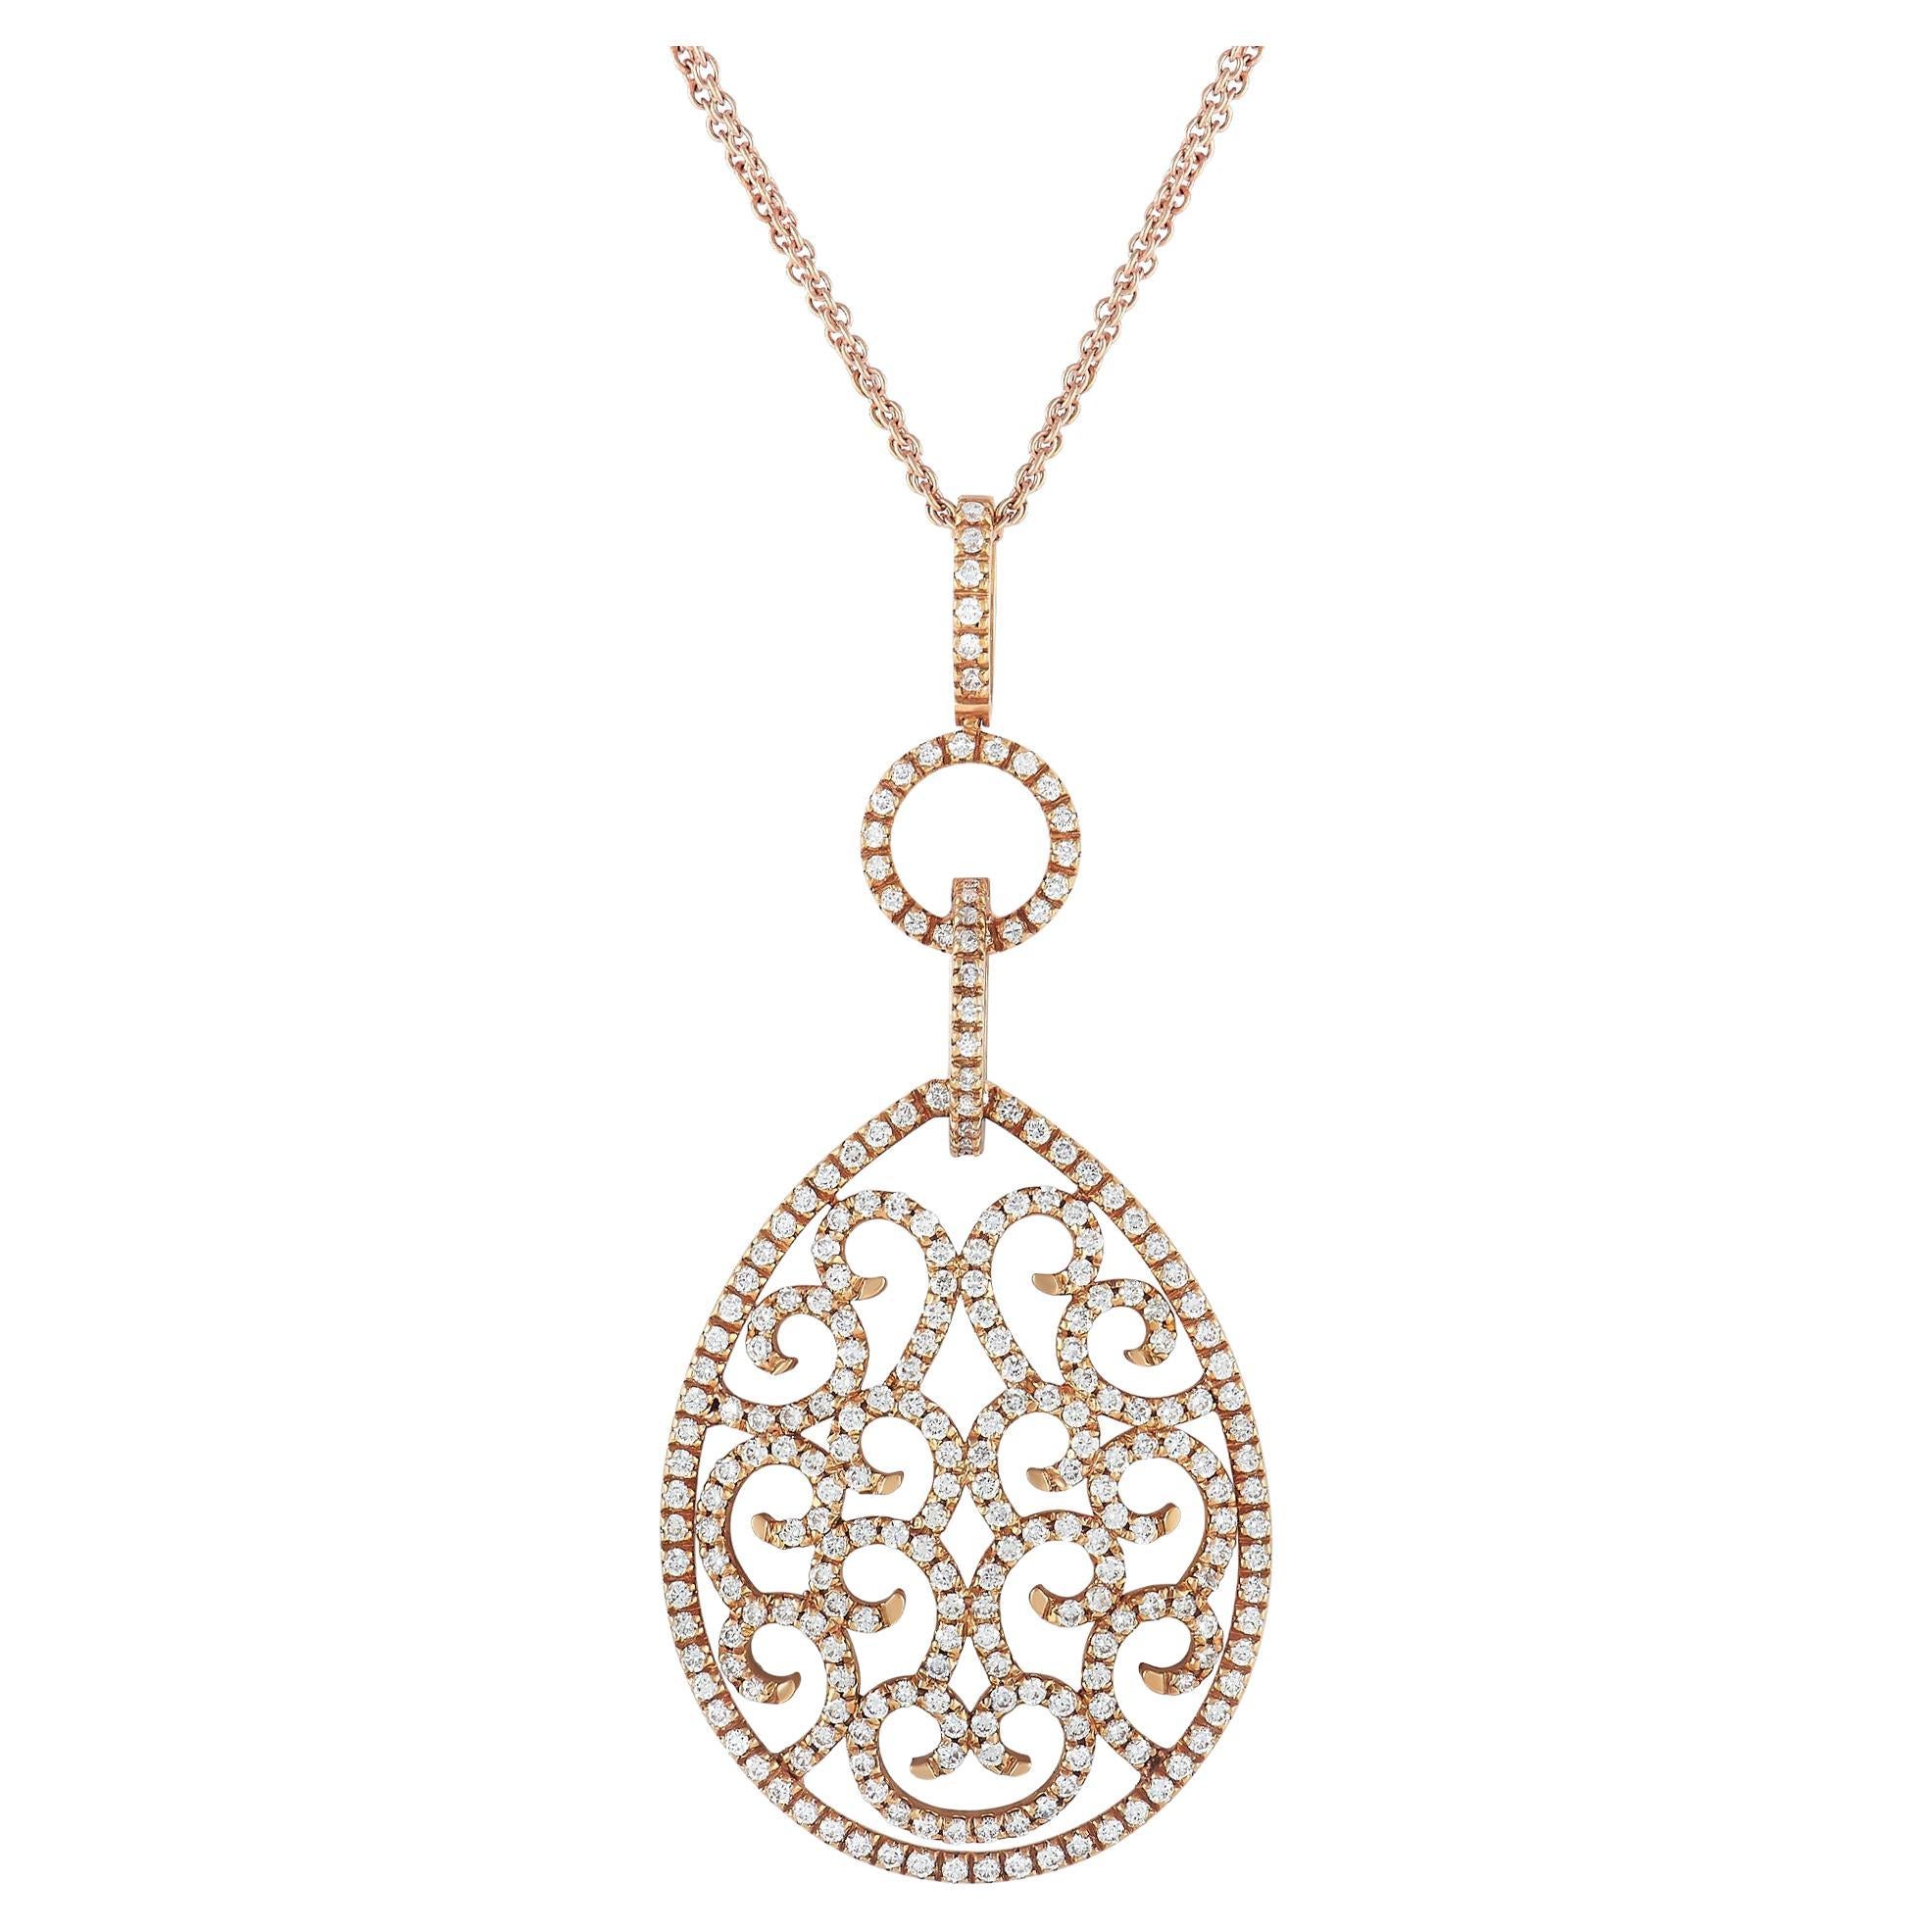 Piero Milano 18K Rose Gold 1.68 Ct Diamond Pendant Necklace